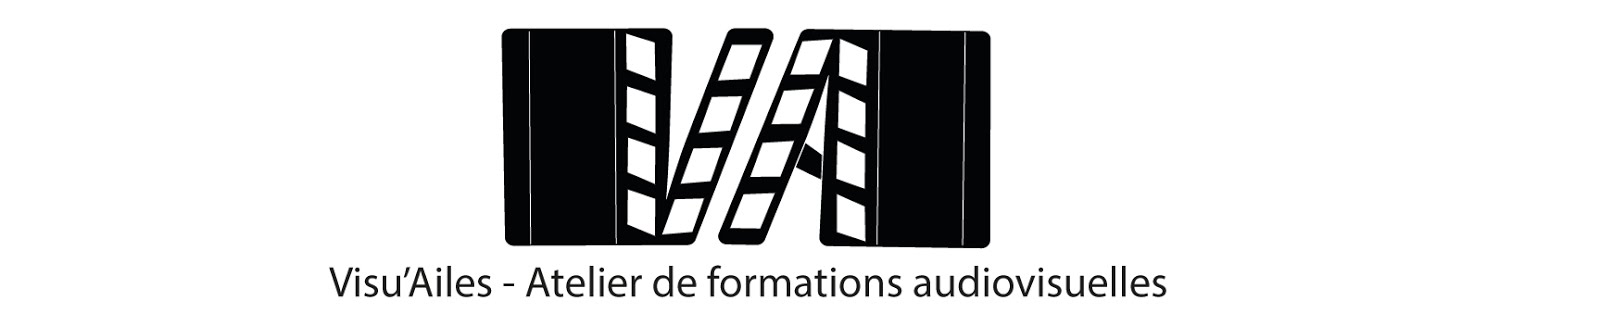 Visu'Ailes - Formation audiovisuelle 